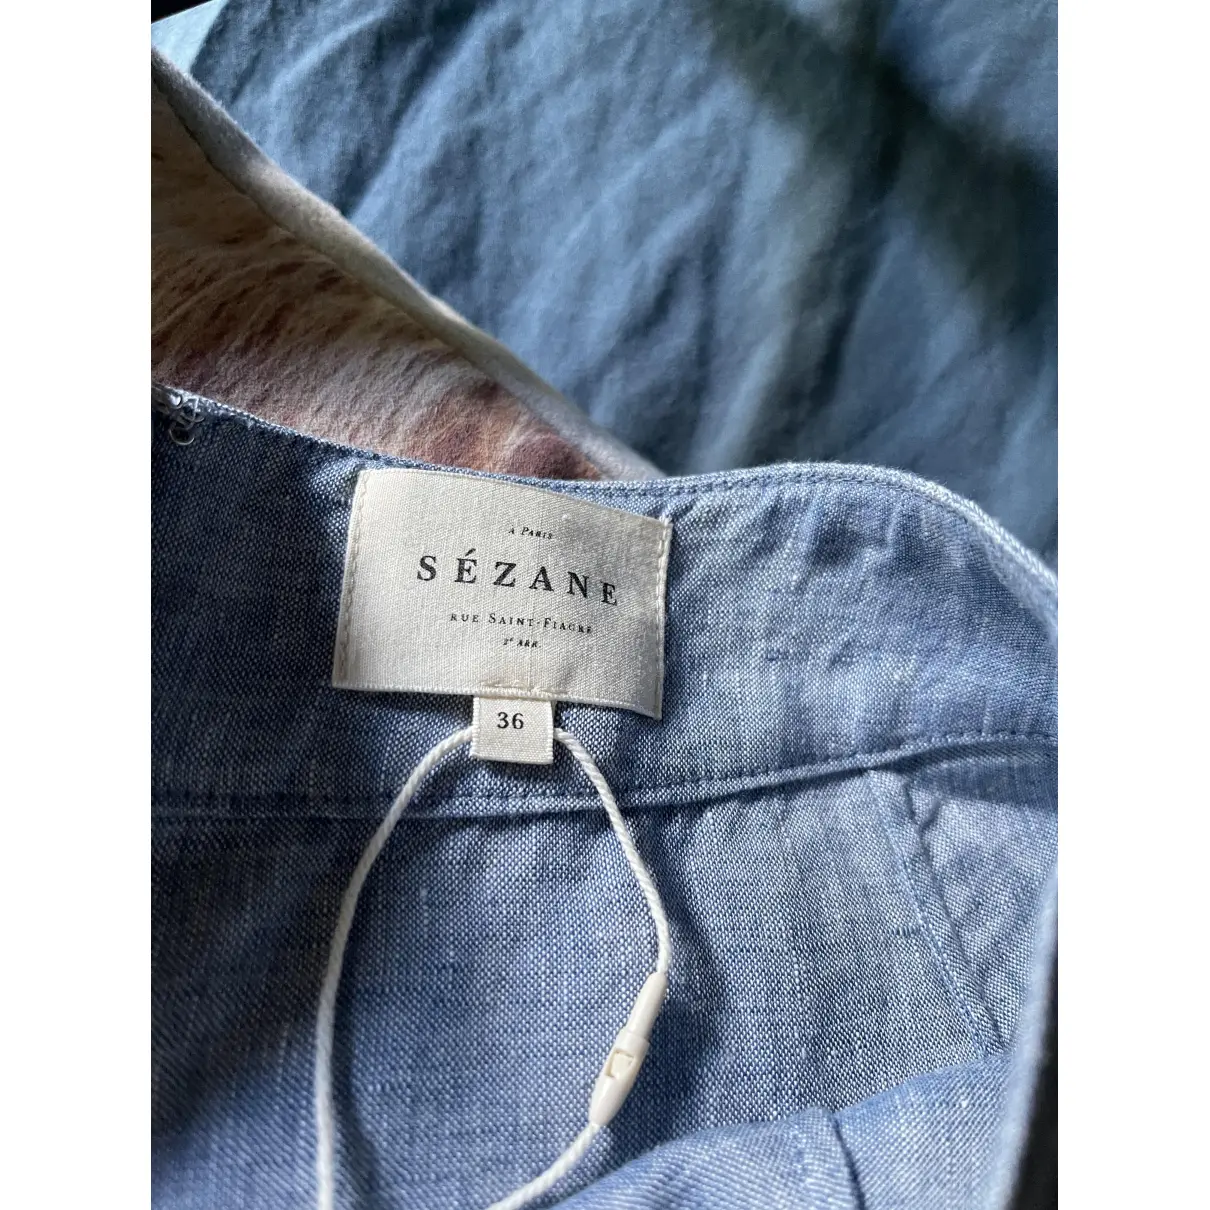 Buy Sézane Spring Summer 2019 linen maxi skirt online